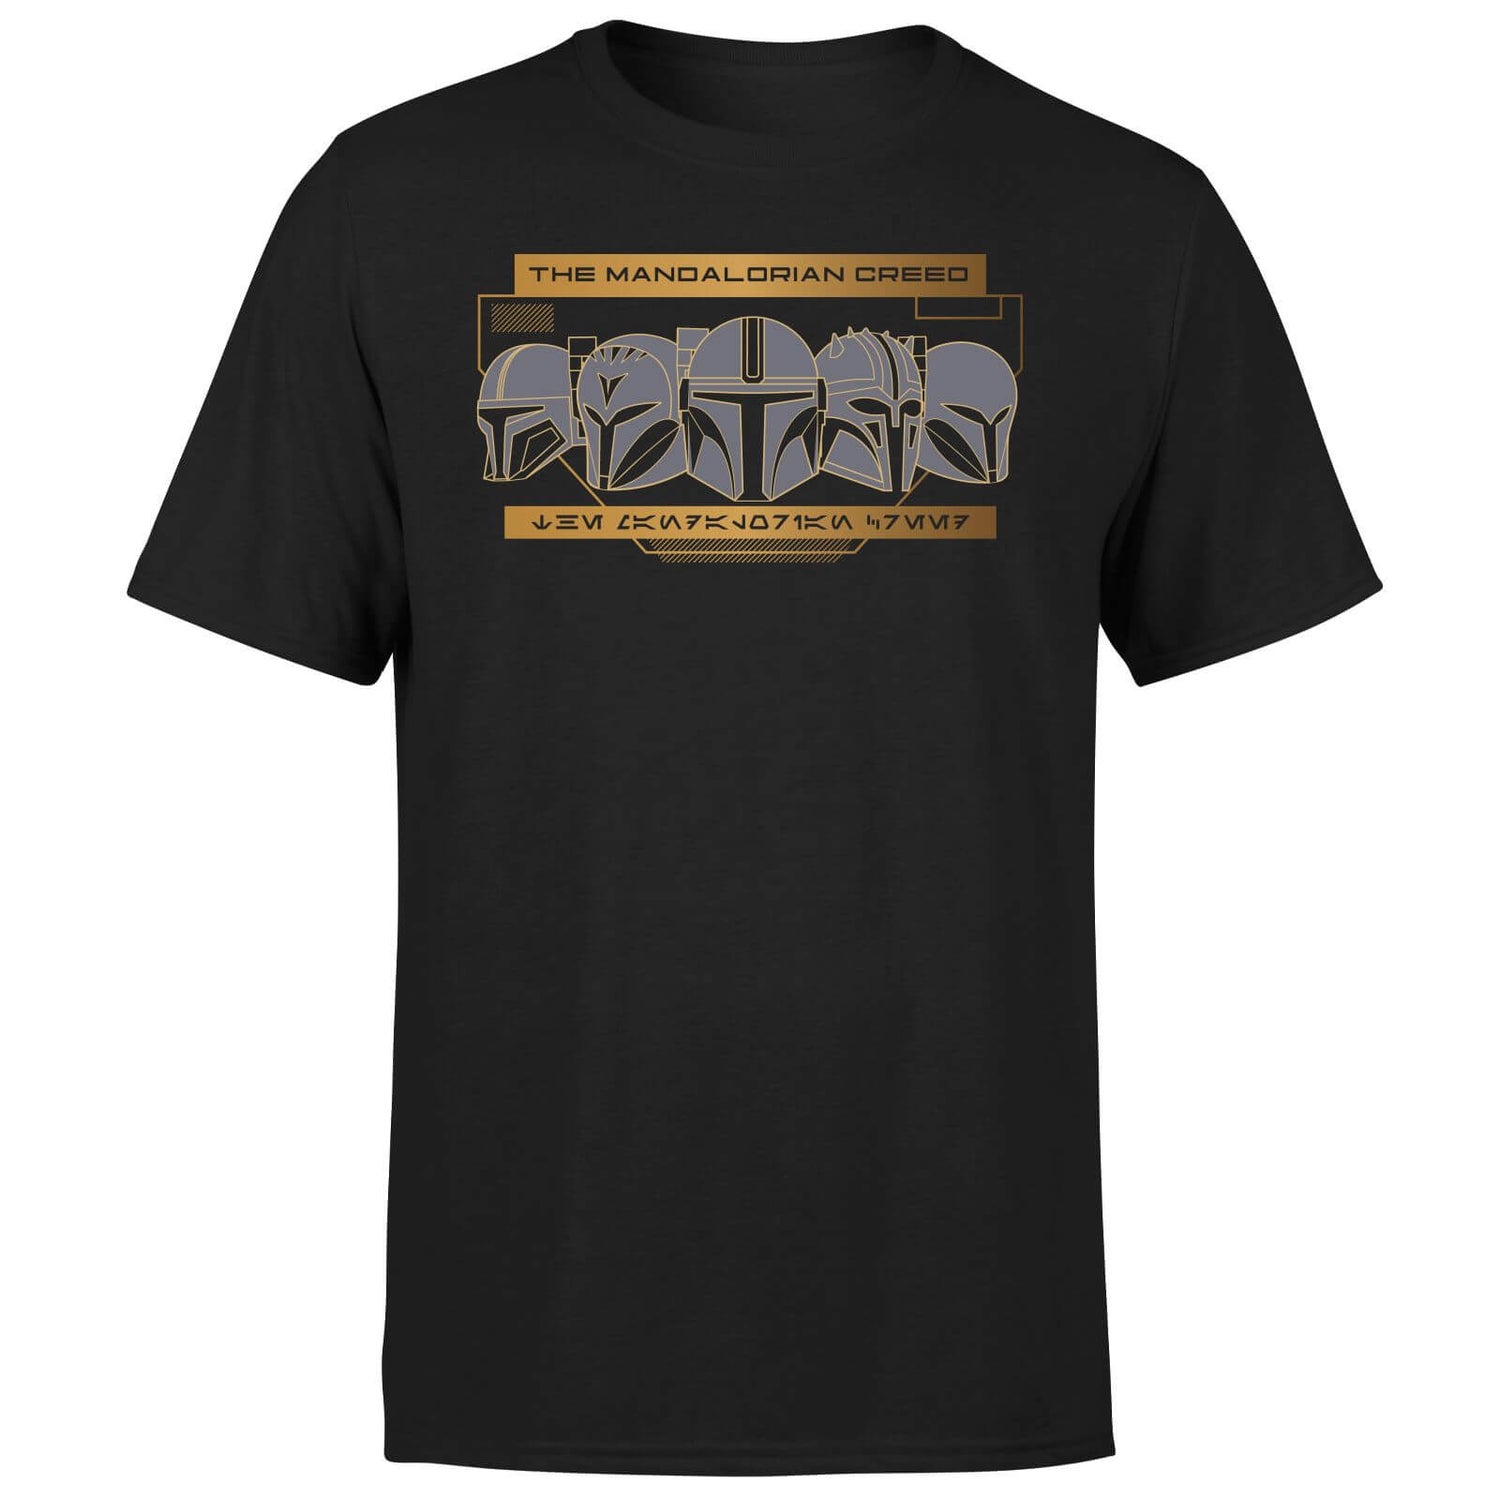 Star Wars The Mandalorian Creed Men's T-Shirt - Black